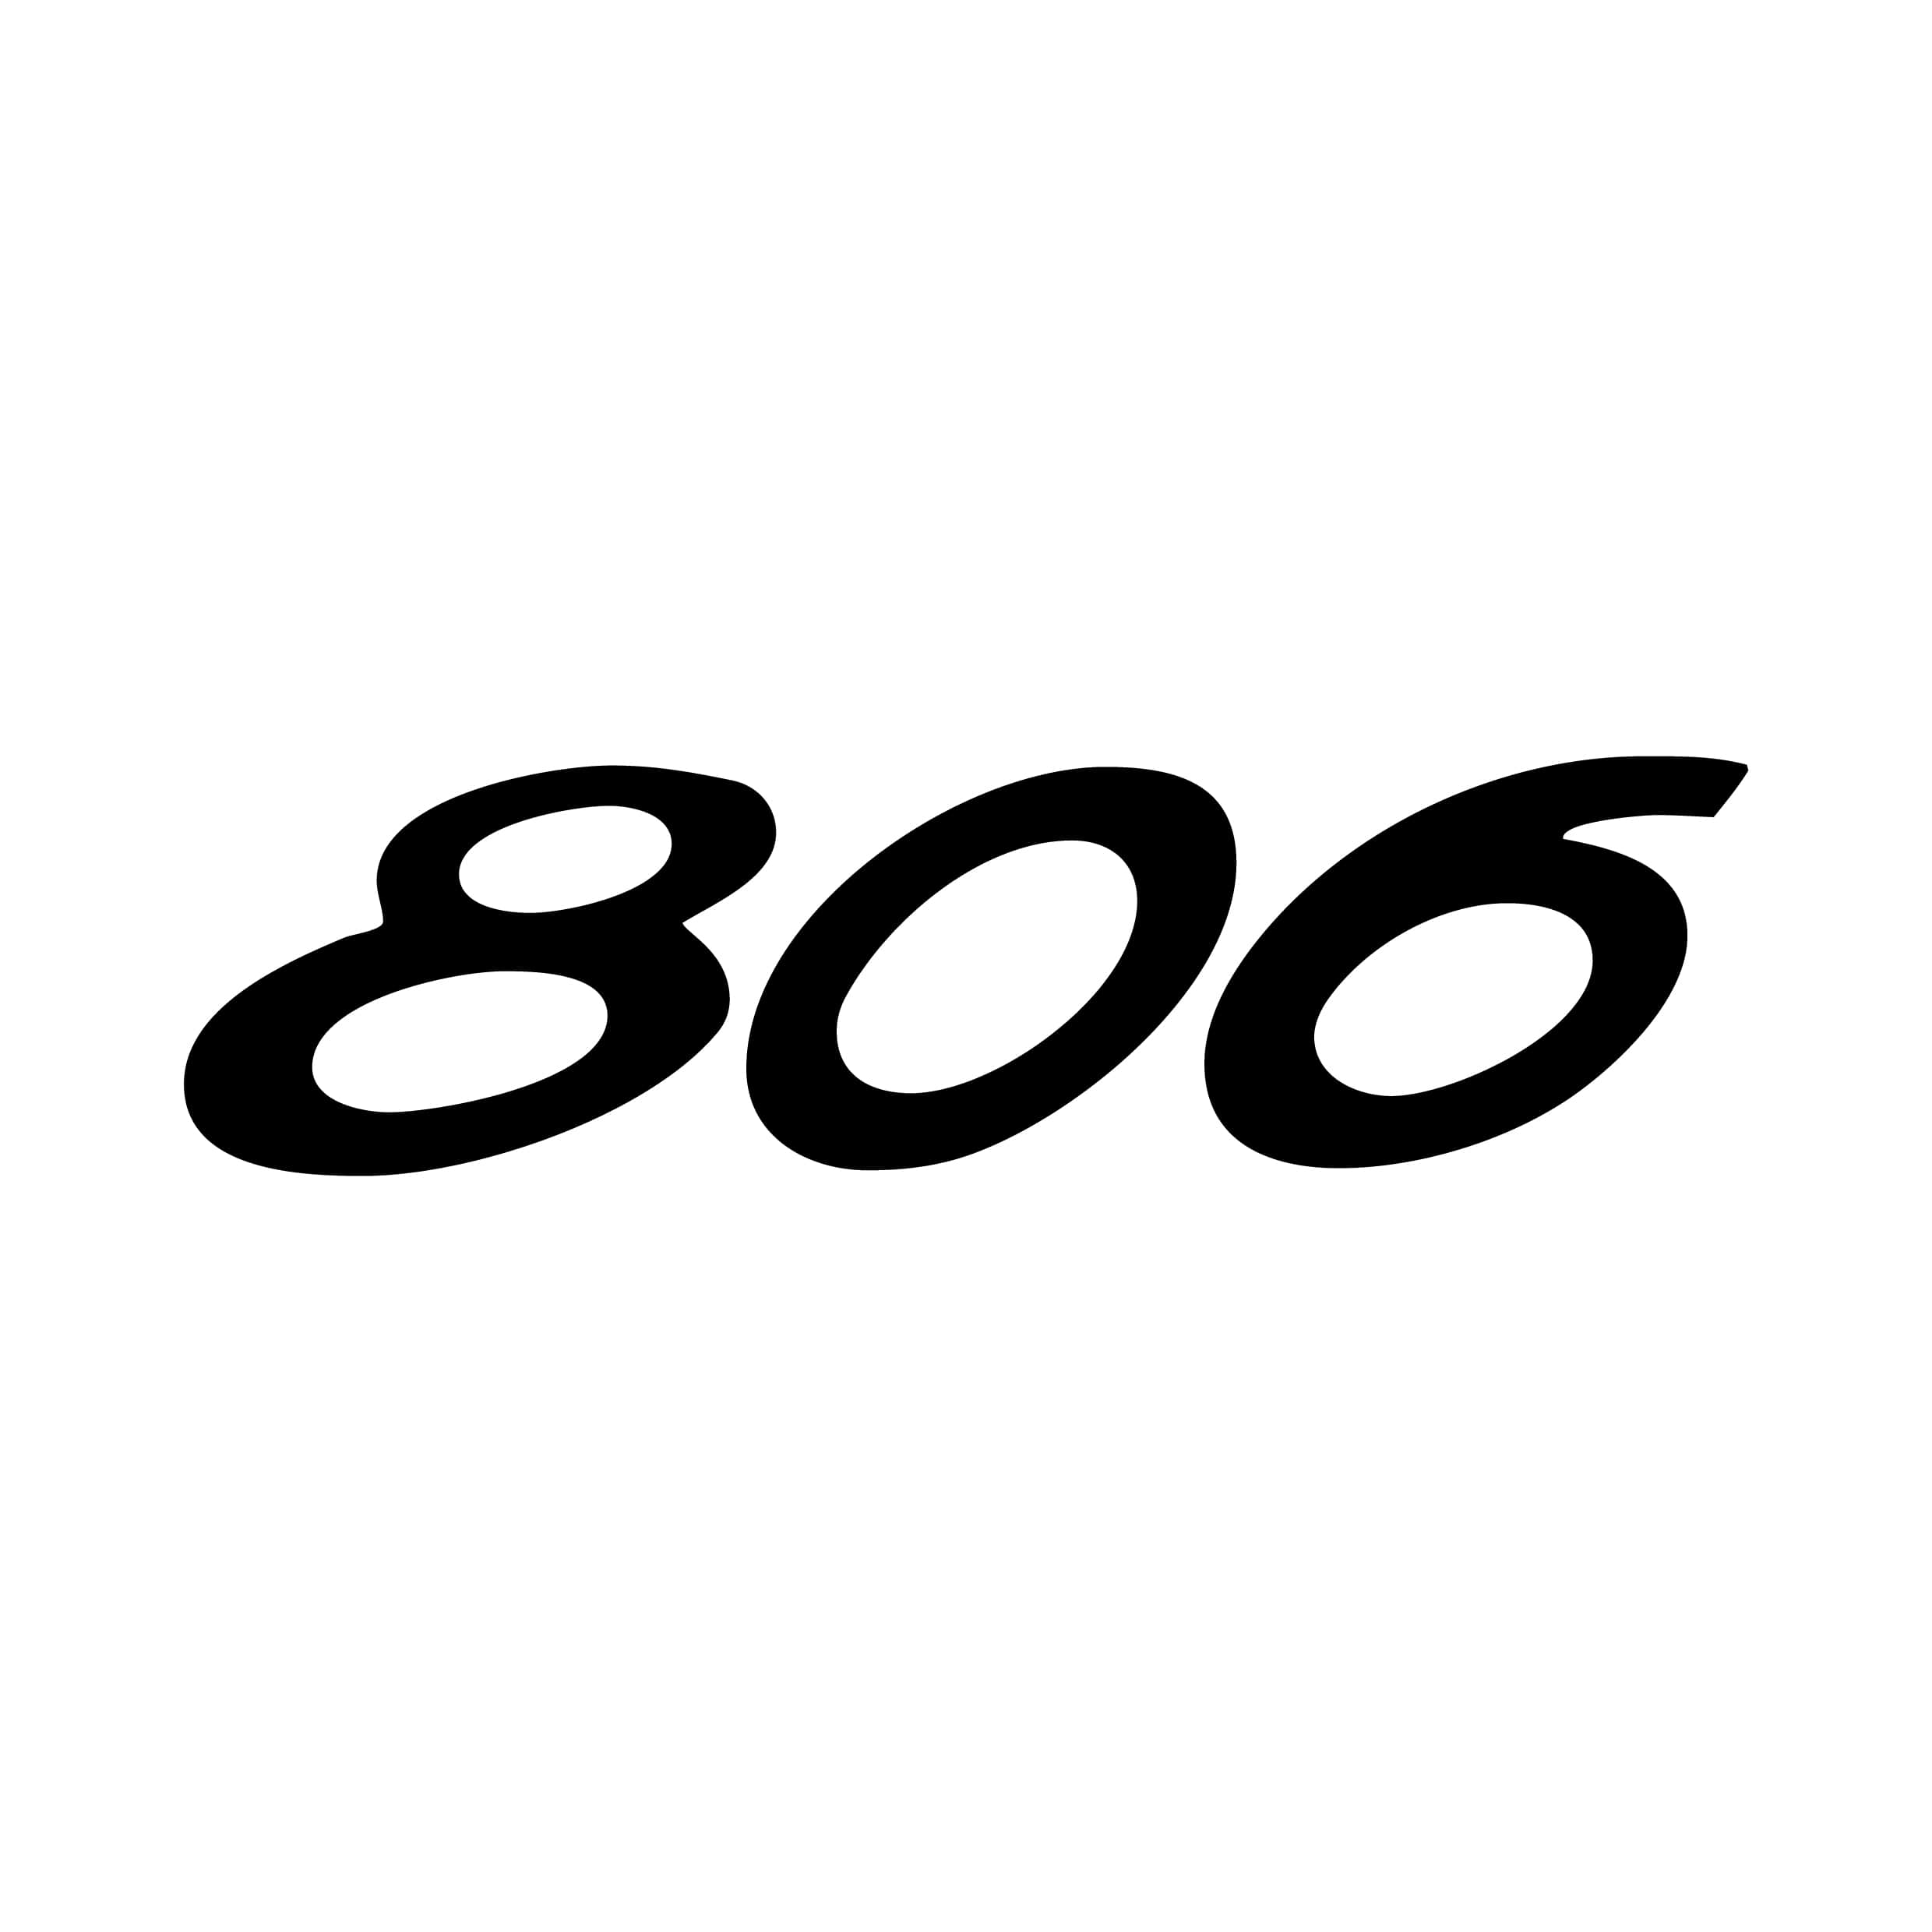 stickers-peugeot-806-ref45-autocollant-voiture-sticker-auto-autocollants-decals-sponsors-racing-tuning-sport-logo-min